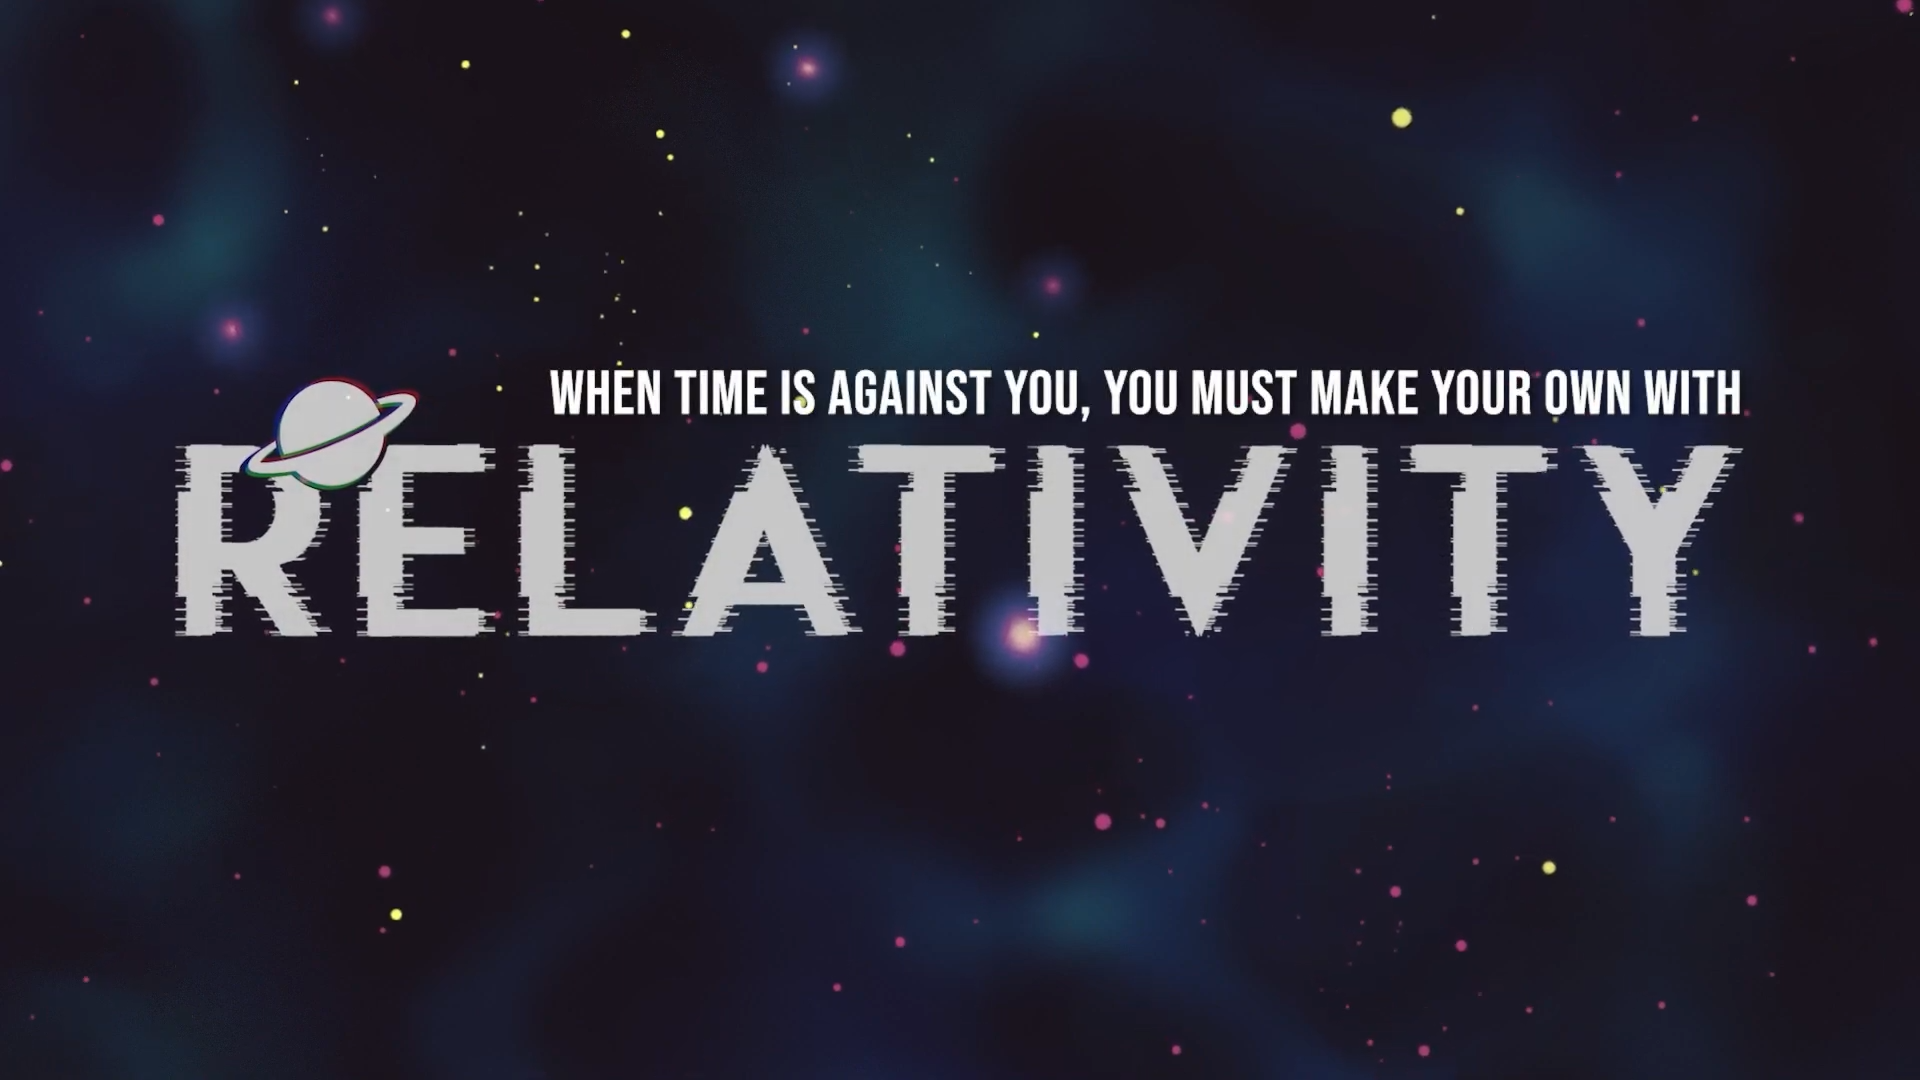 Relativity Xbox Game Studio Game Camp NOLA Project Image